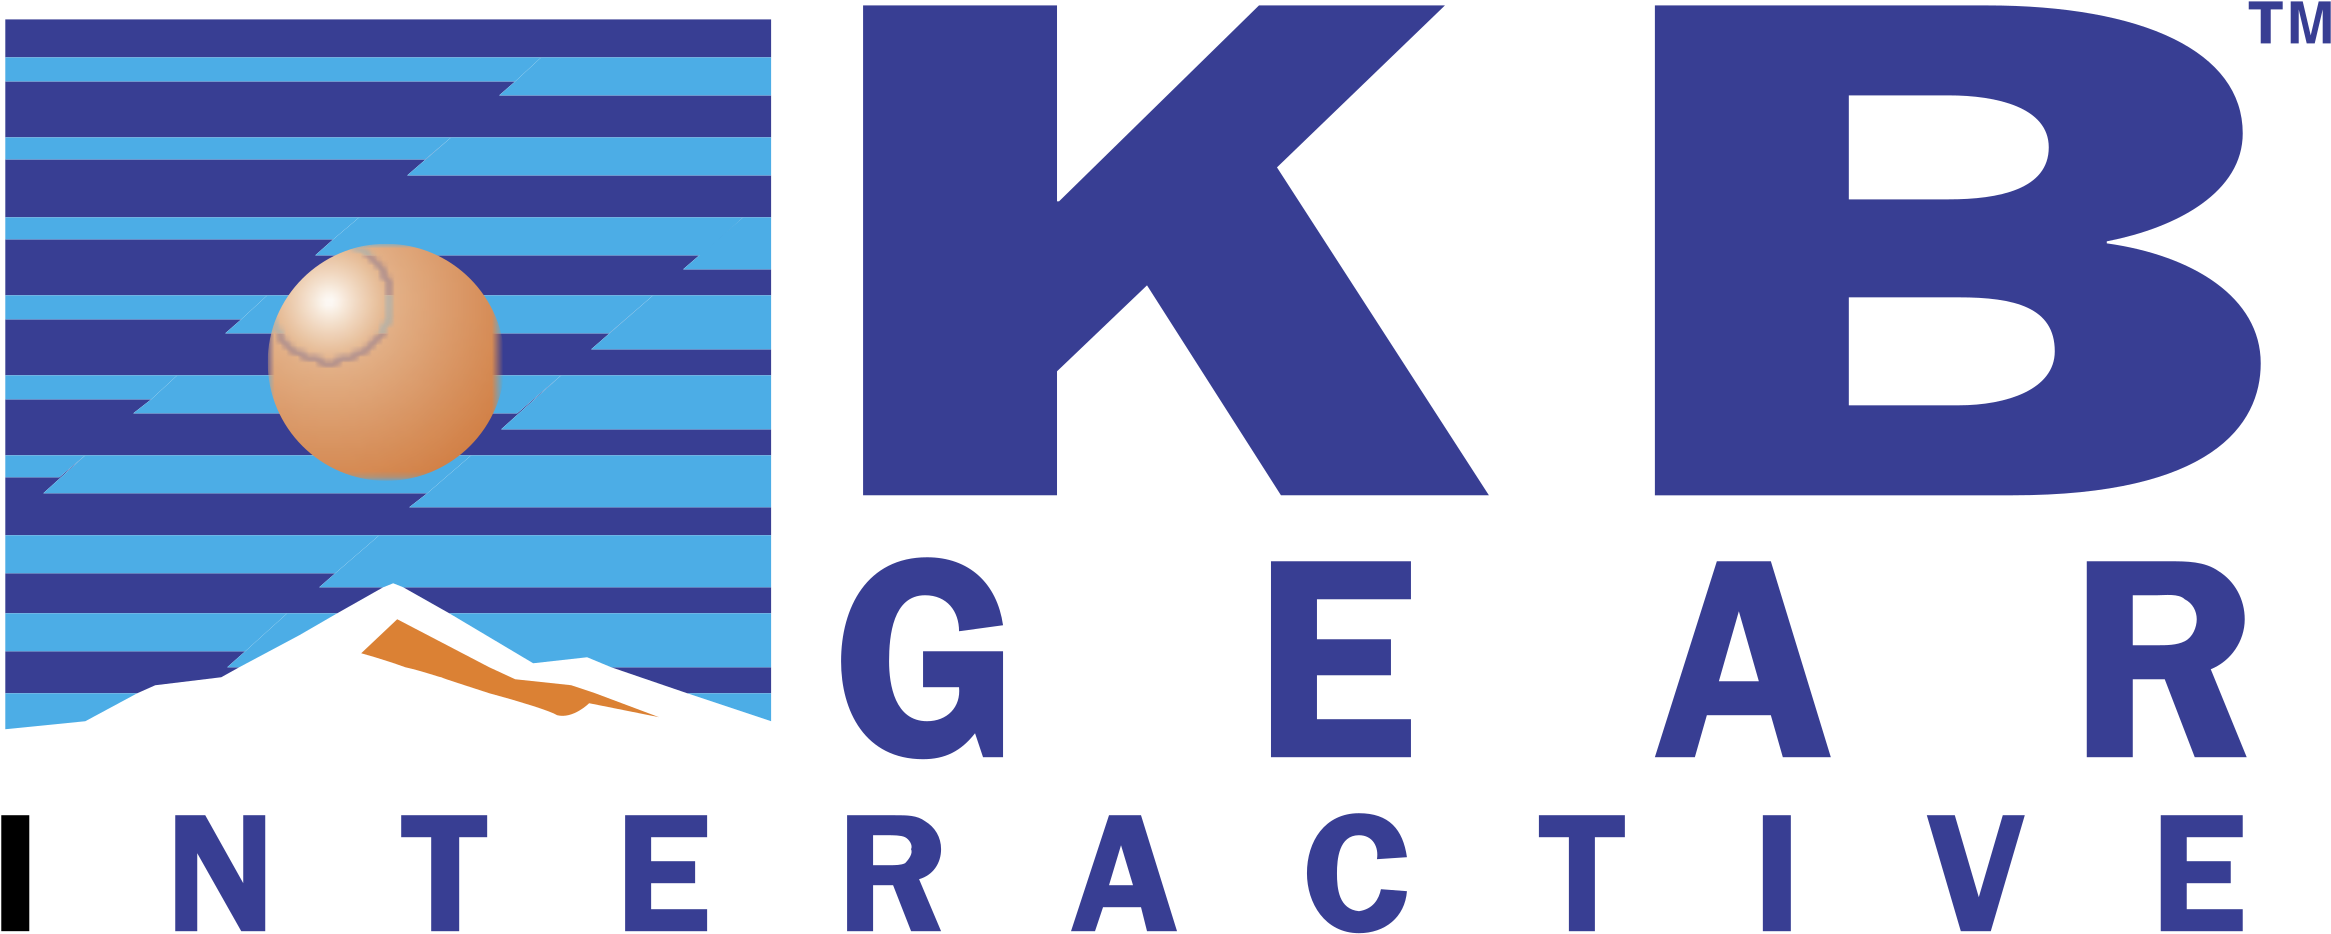 Kb Gear Logo Png Transparent - Graphic Design (2400x2400), Png Download